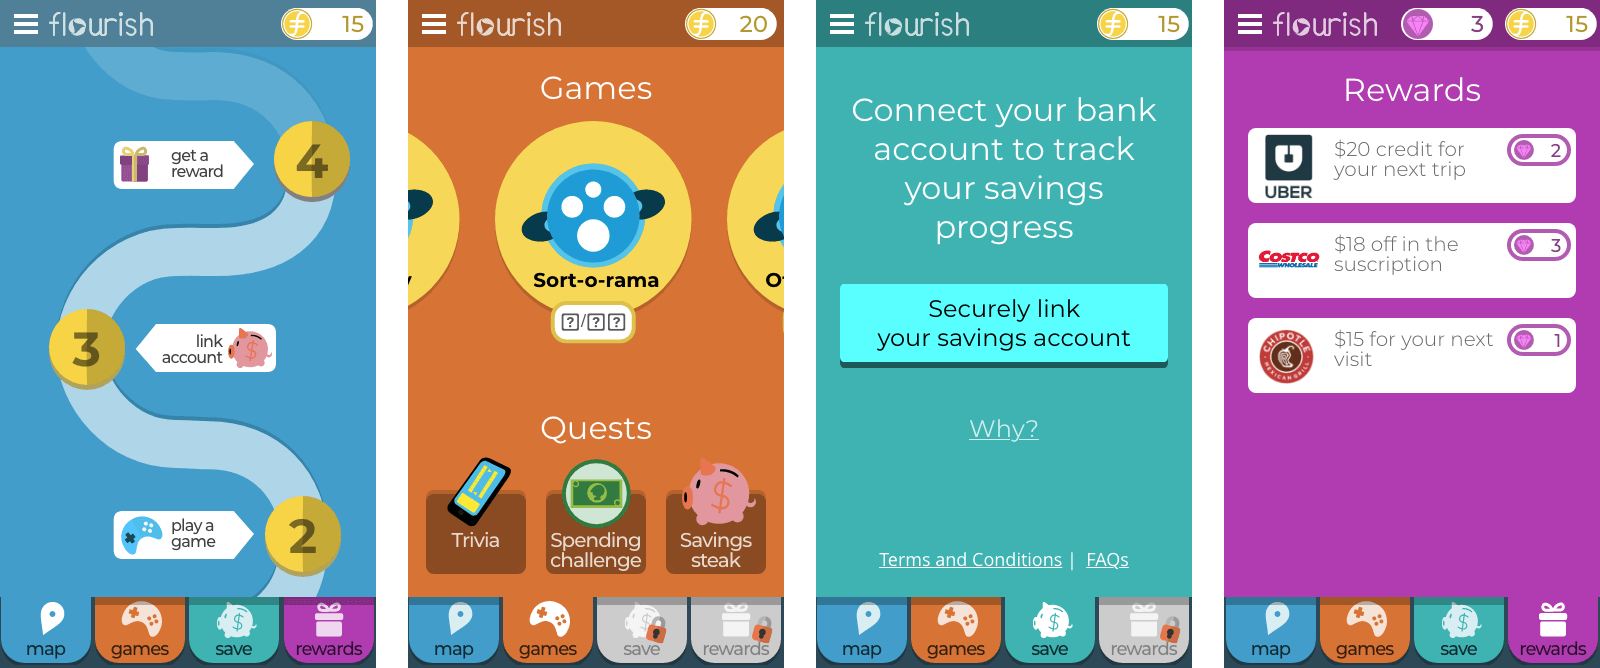 Screenshots of Flourish Application Screens